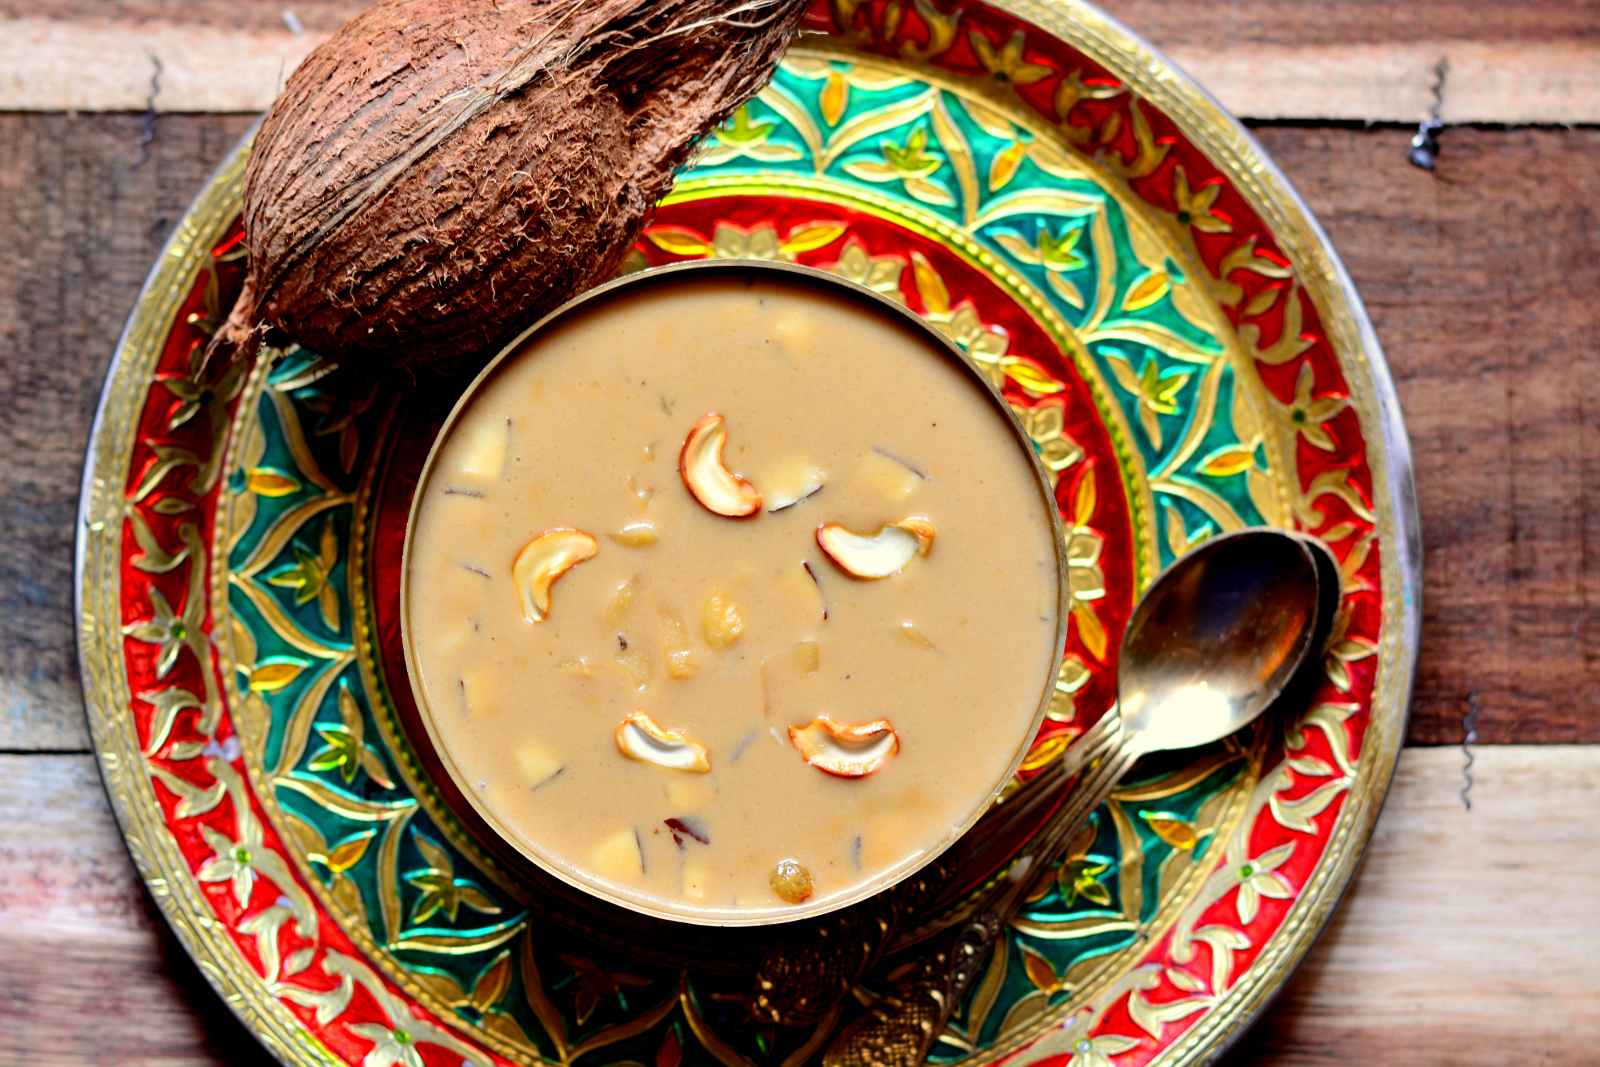 Ada Pradhaman Recipe - Kerala Style Rice Ada Pudding With Jaggery & Coconut Milk